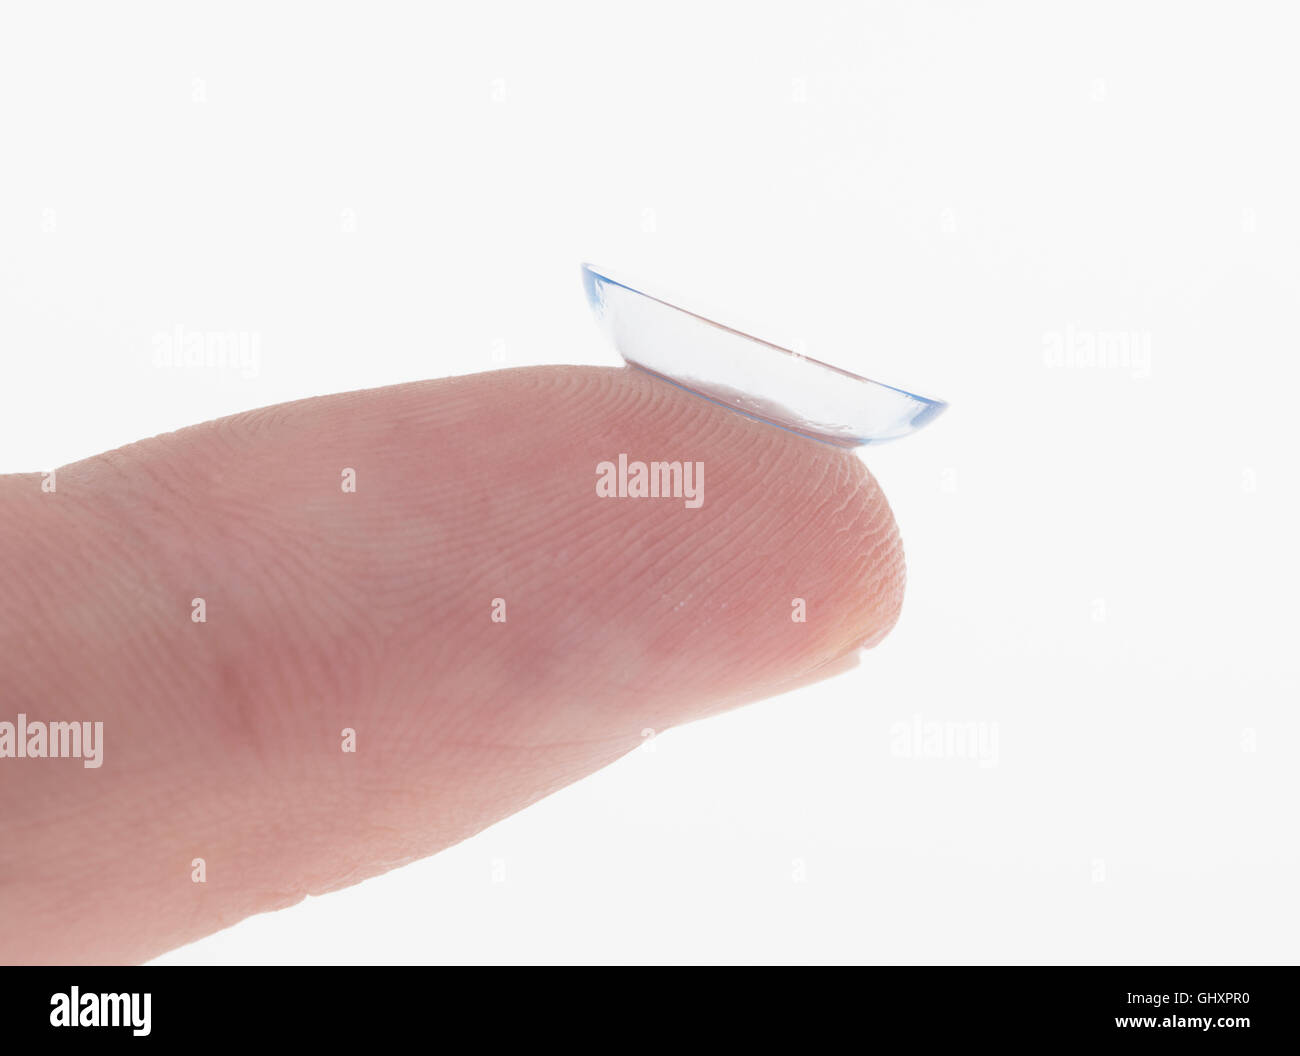 Kontaktlinse auf finger Stockfoto